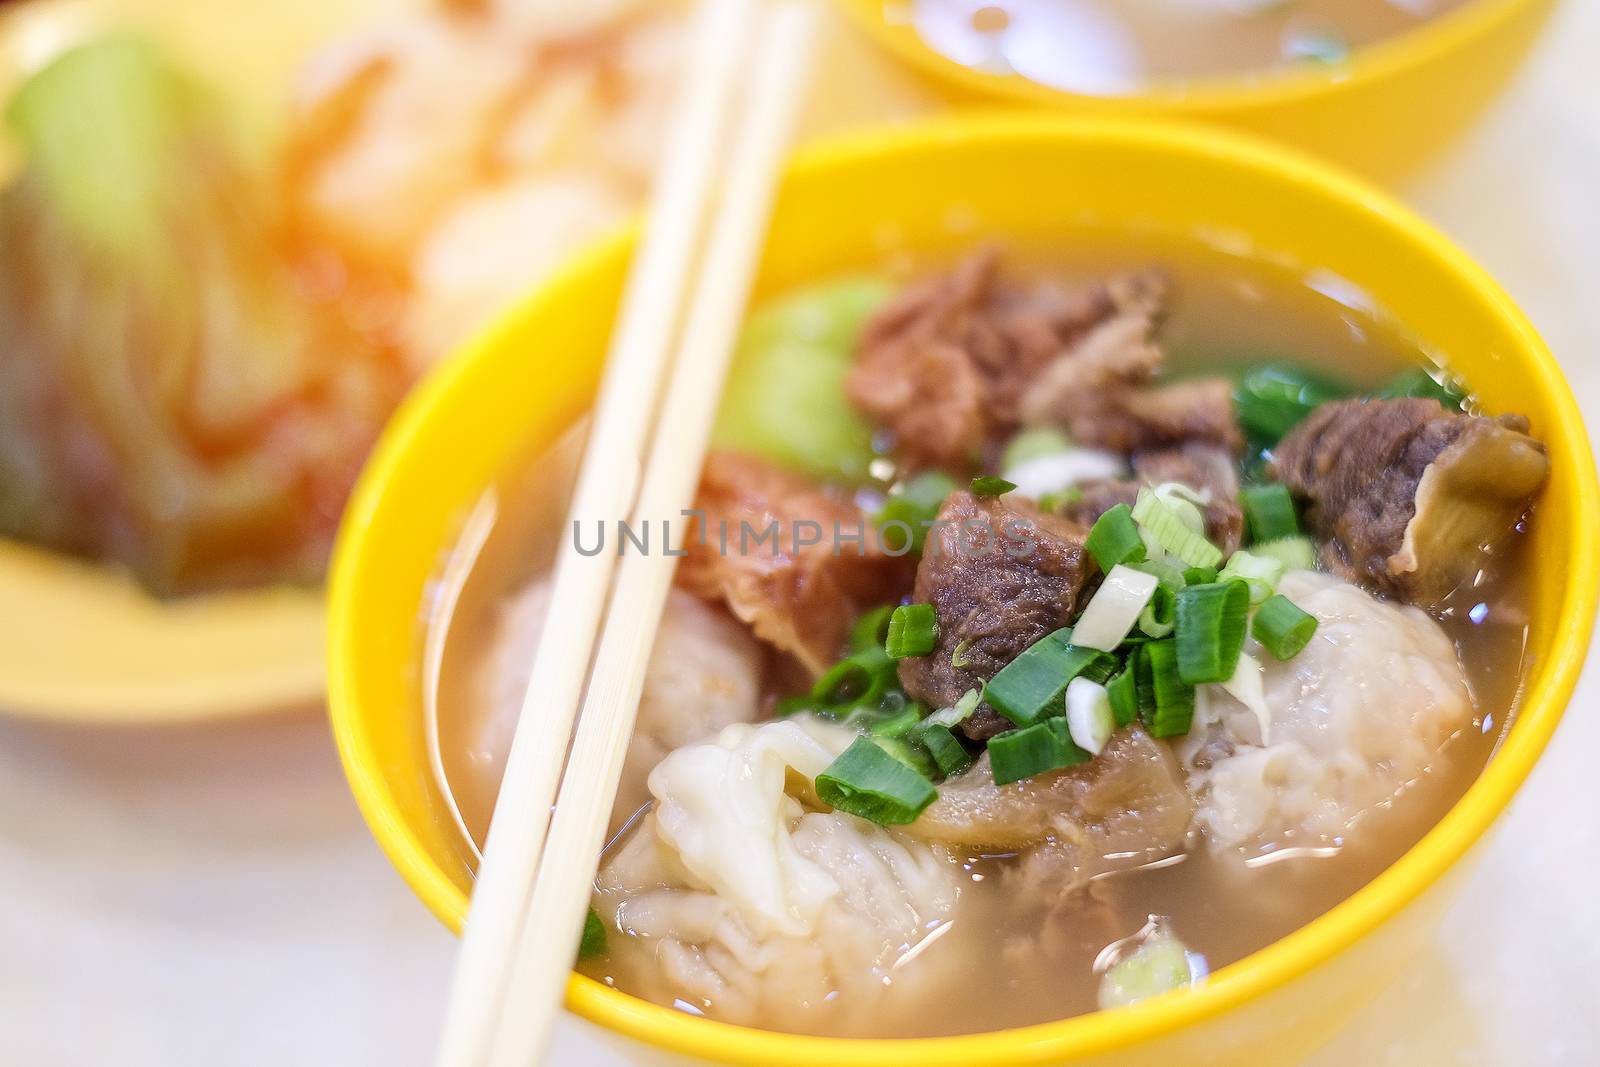 Pork soup and dumpling close up in Hong Kong by Surasak